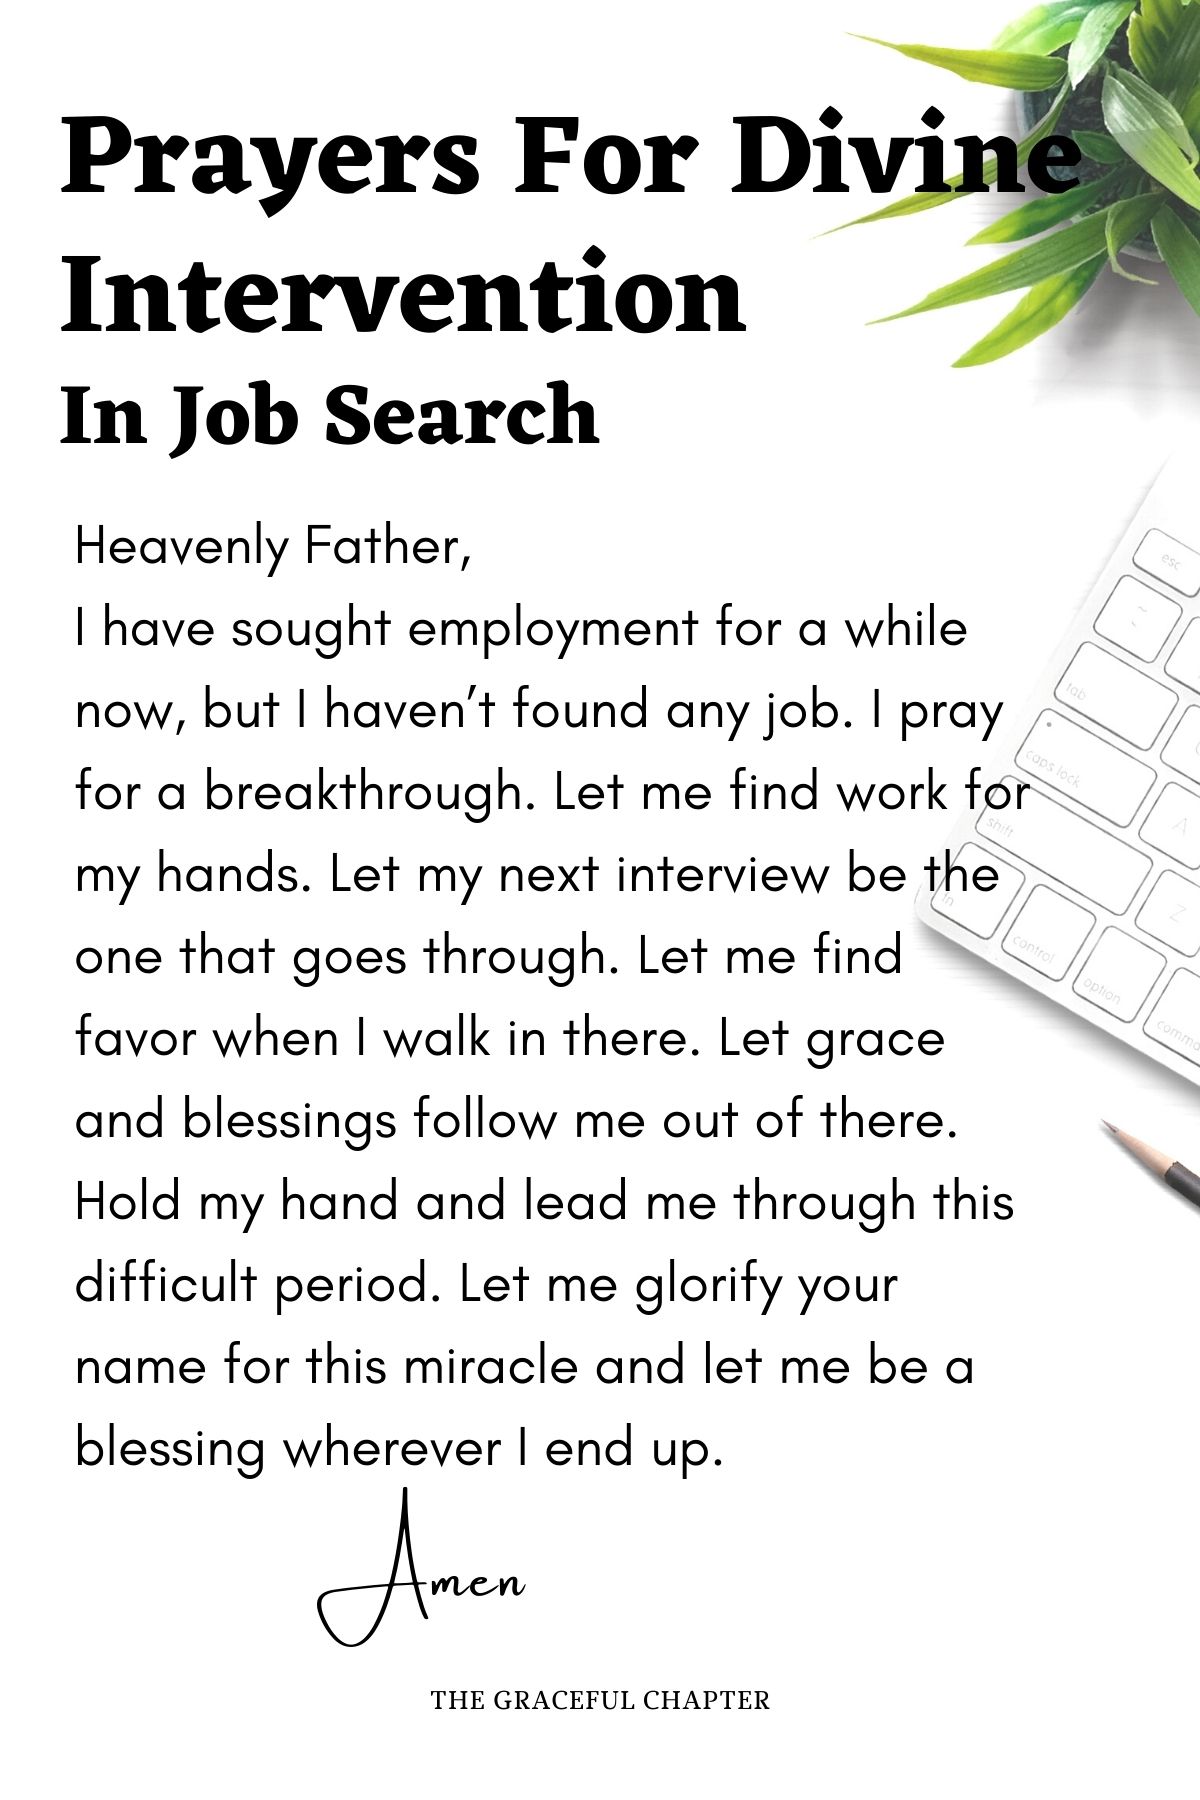 Prayers for divine intervention Job search